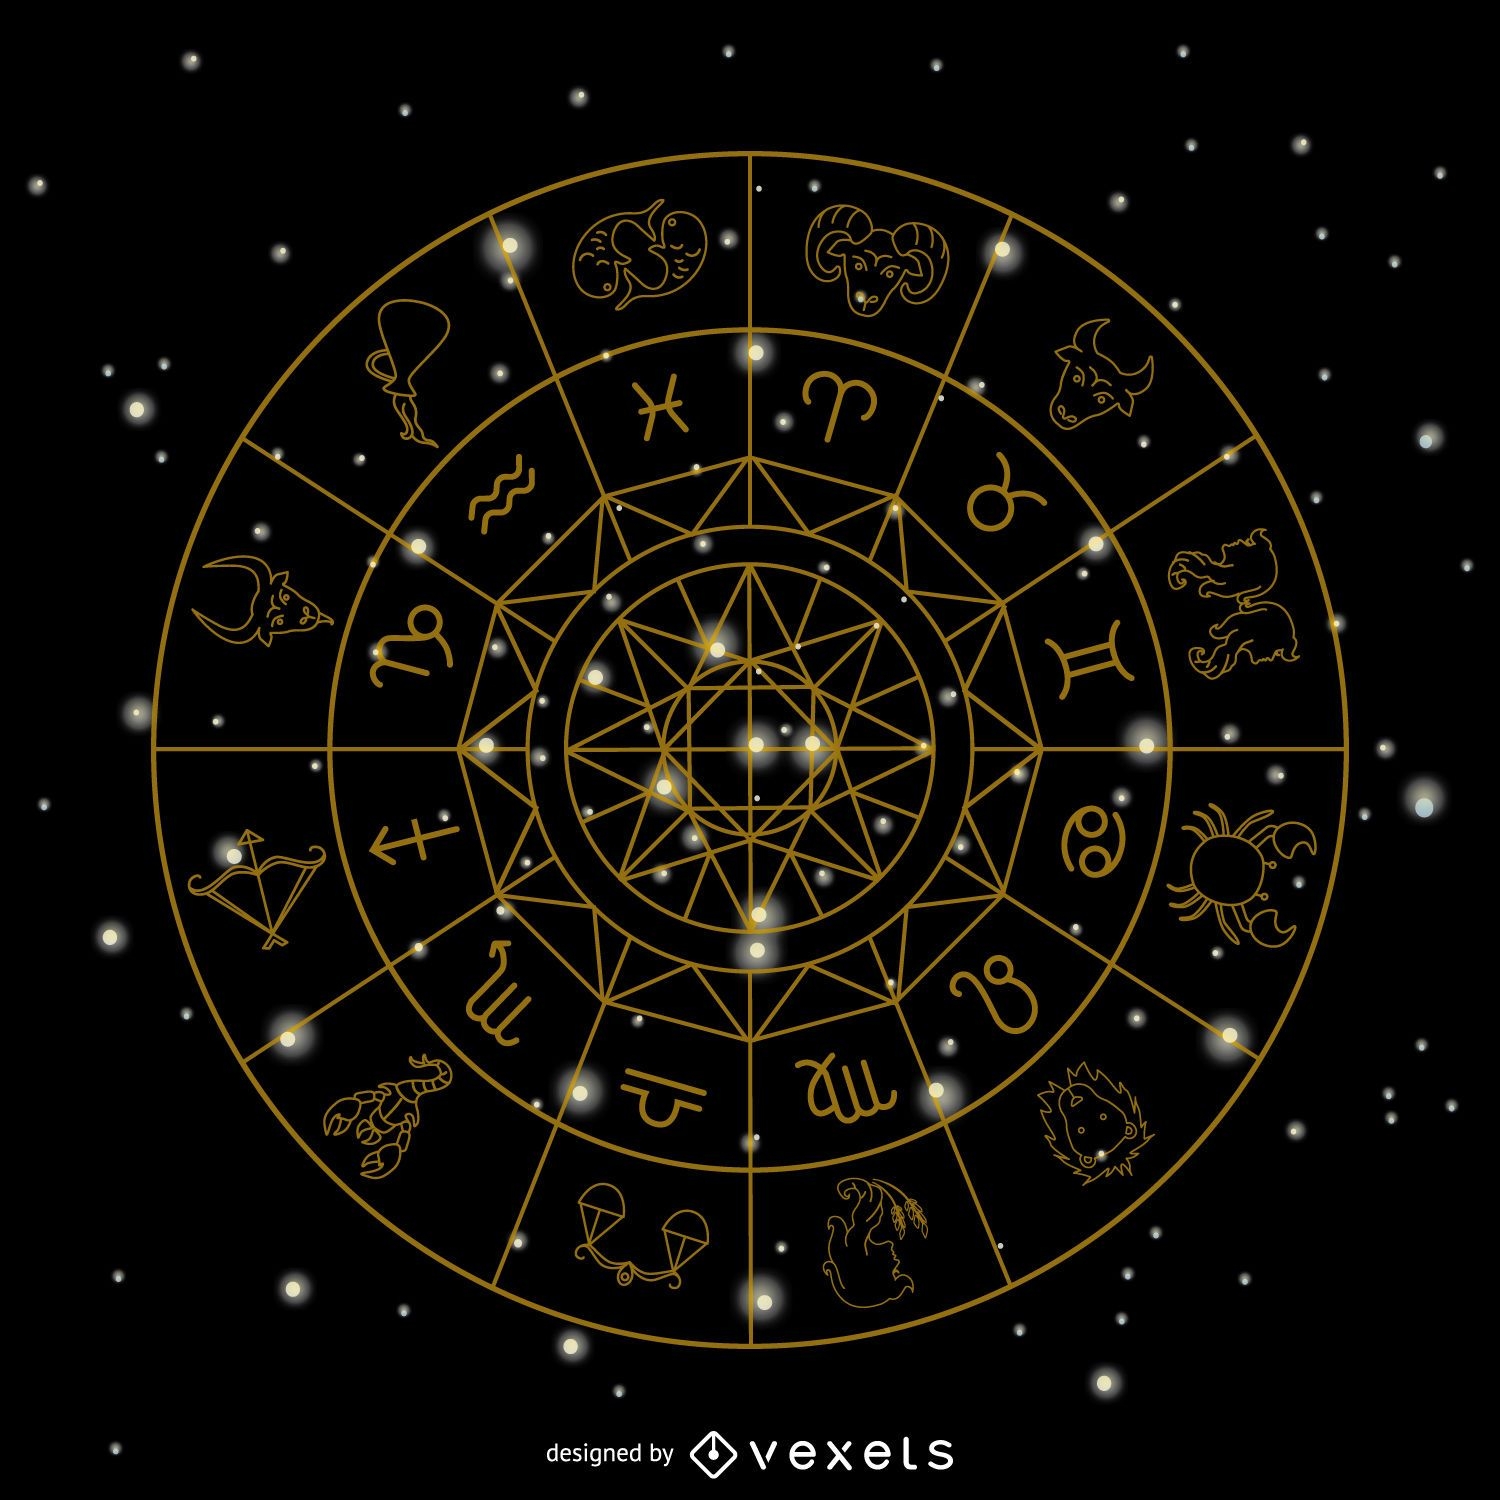 Zodiac signs symbols